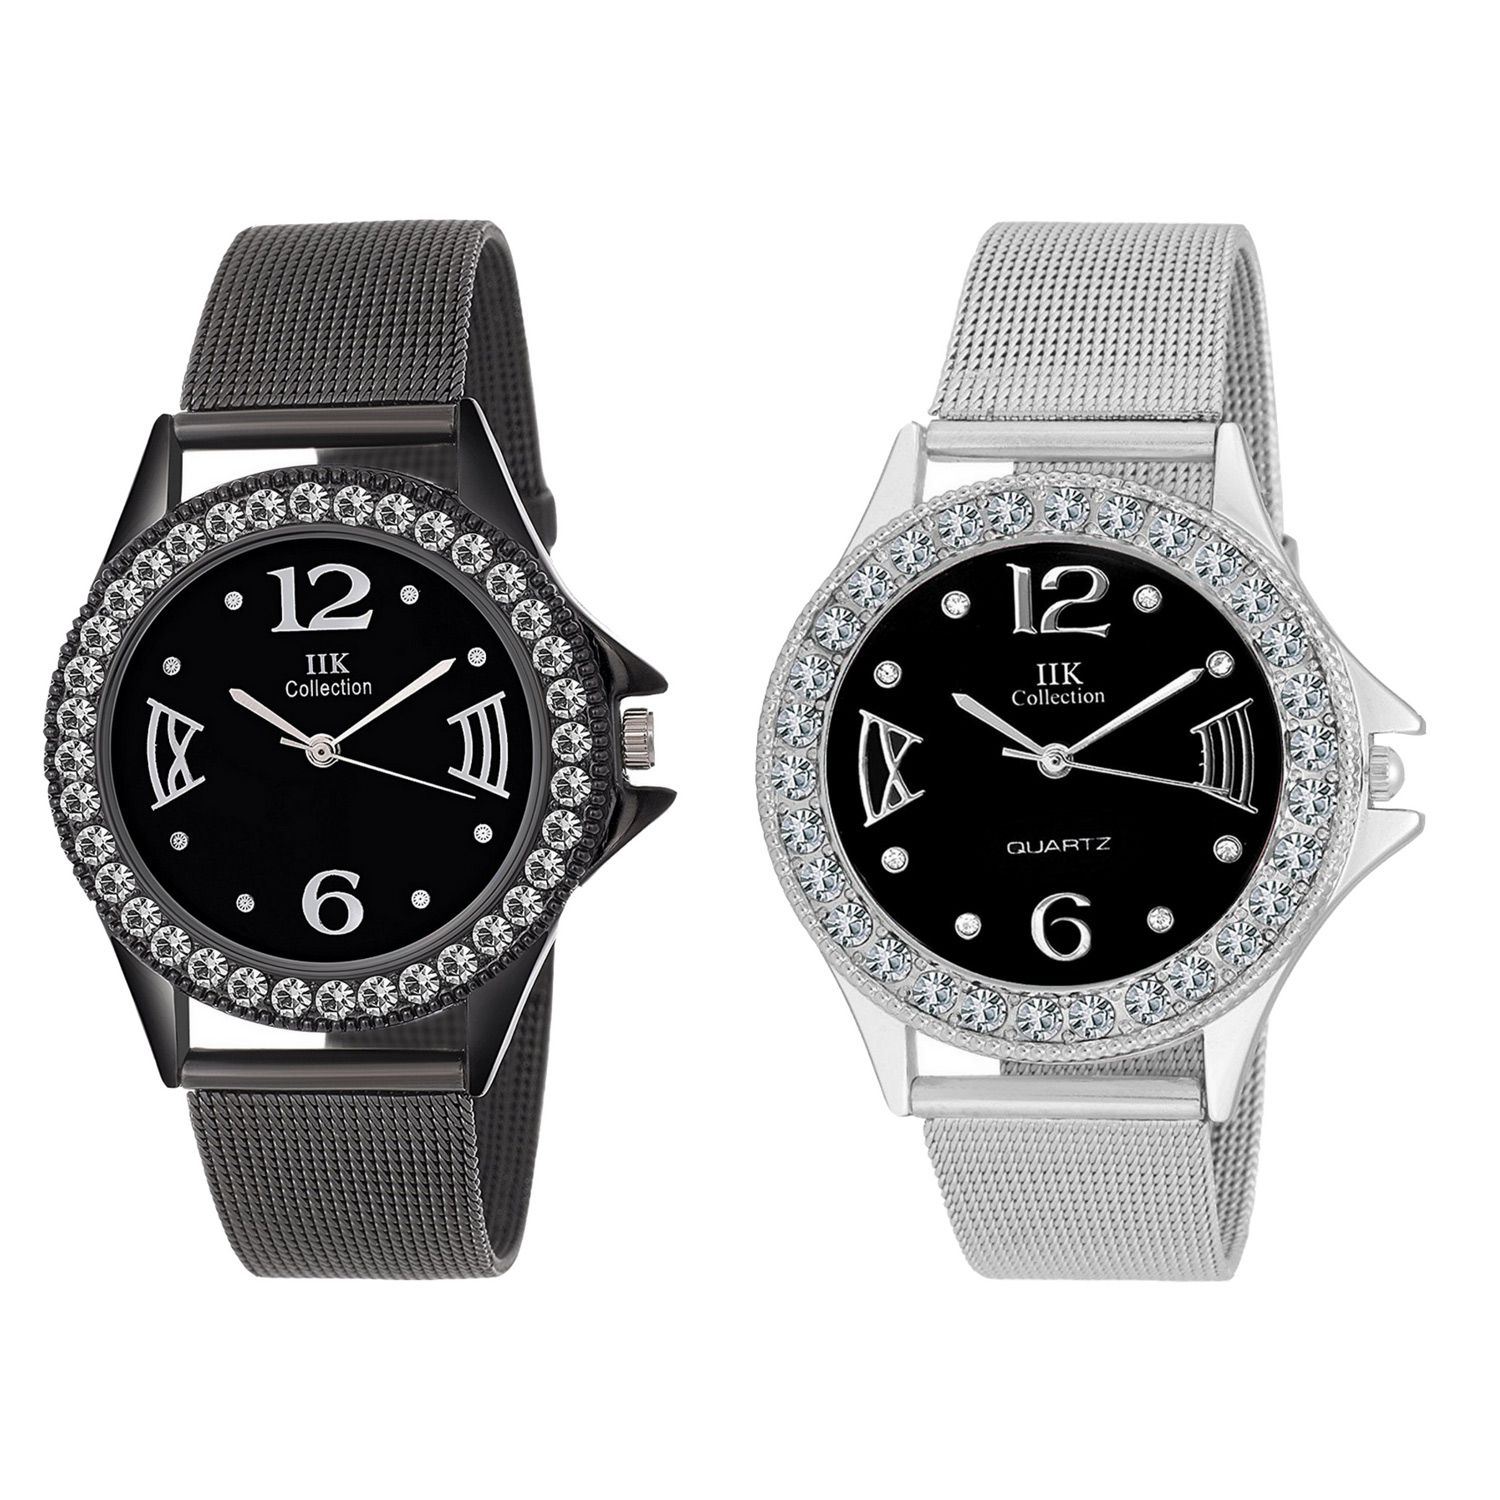     			IIK Collection Set of 2  Analog Black Dial Crystal Studded Wrist Watch Combo For Women & Girls   (IIK-1115W-1117W)